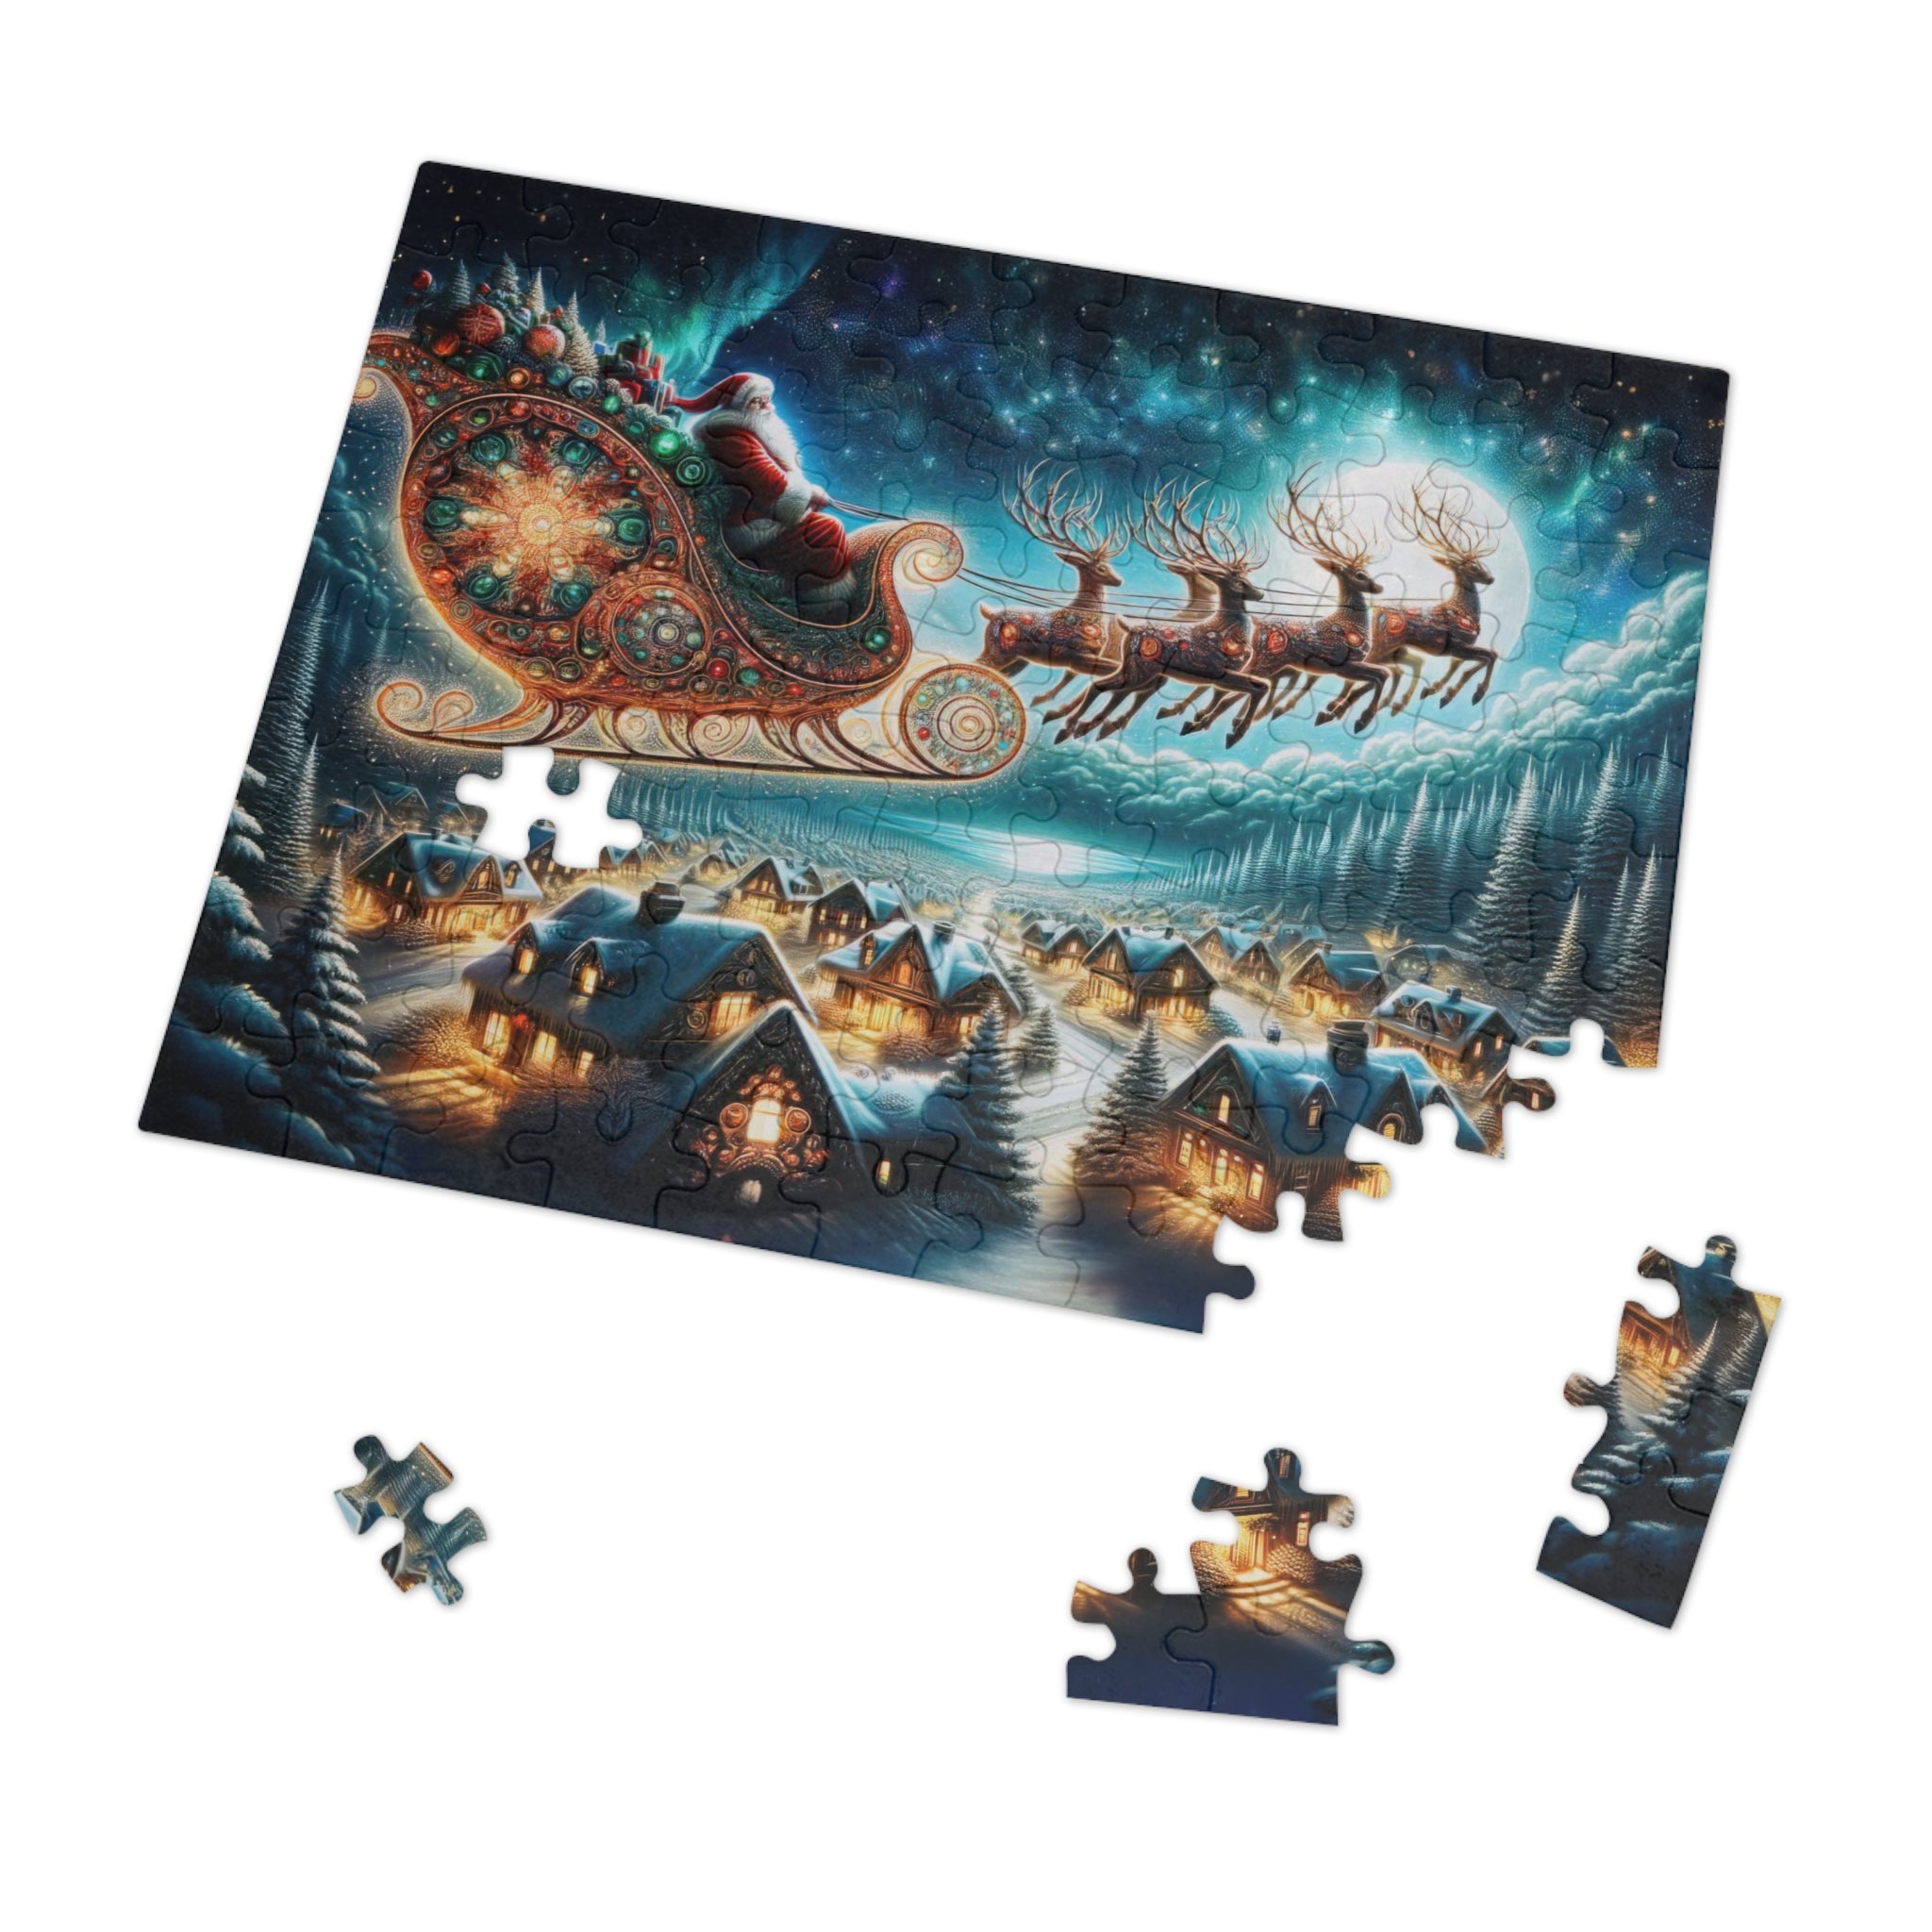 A Celestial Sleigh Ride Jigsaw Puzzle